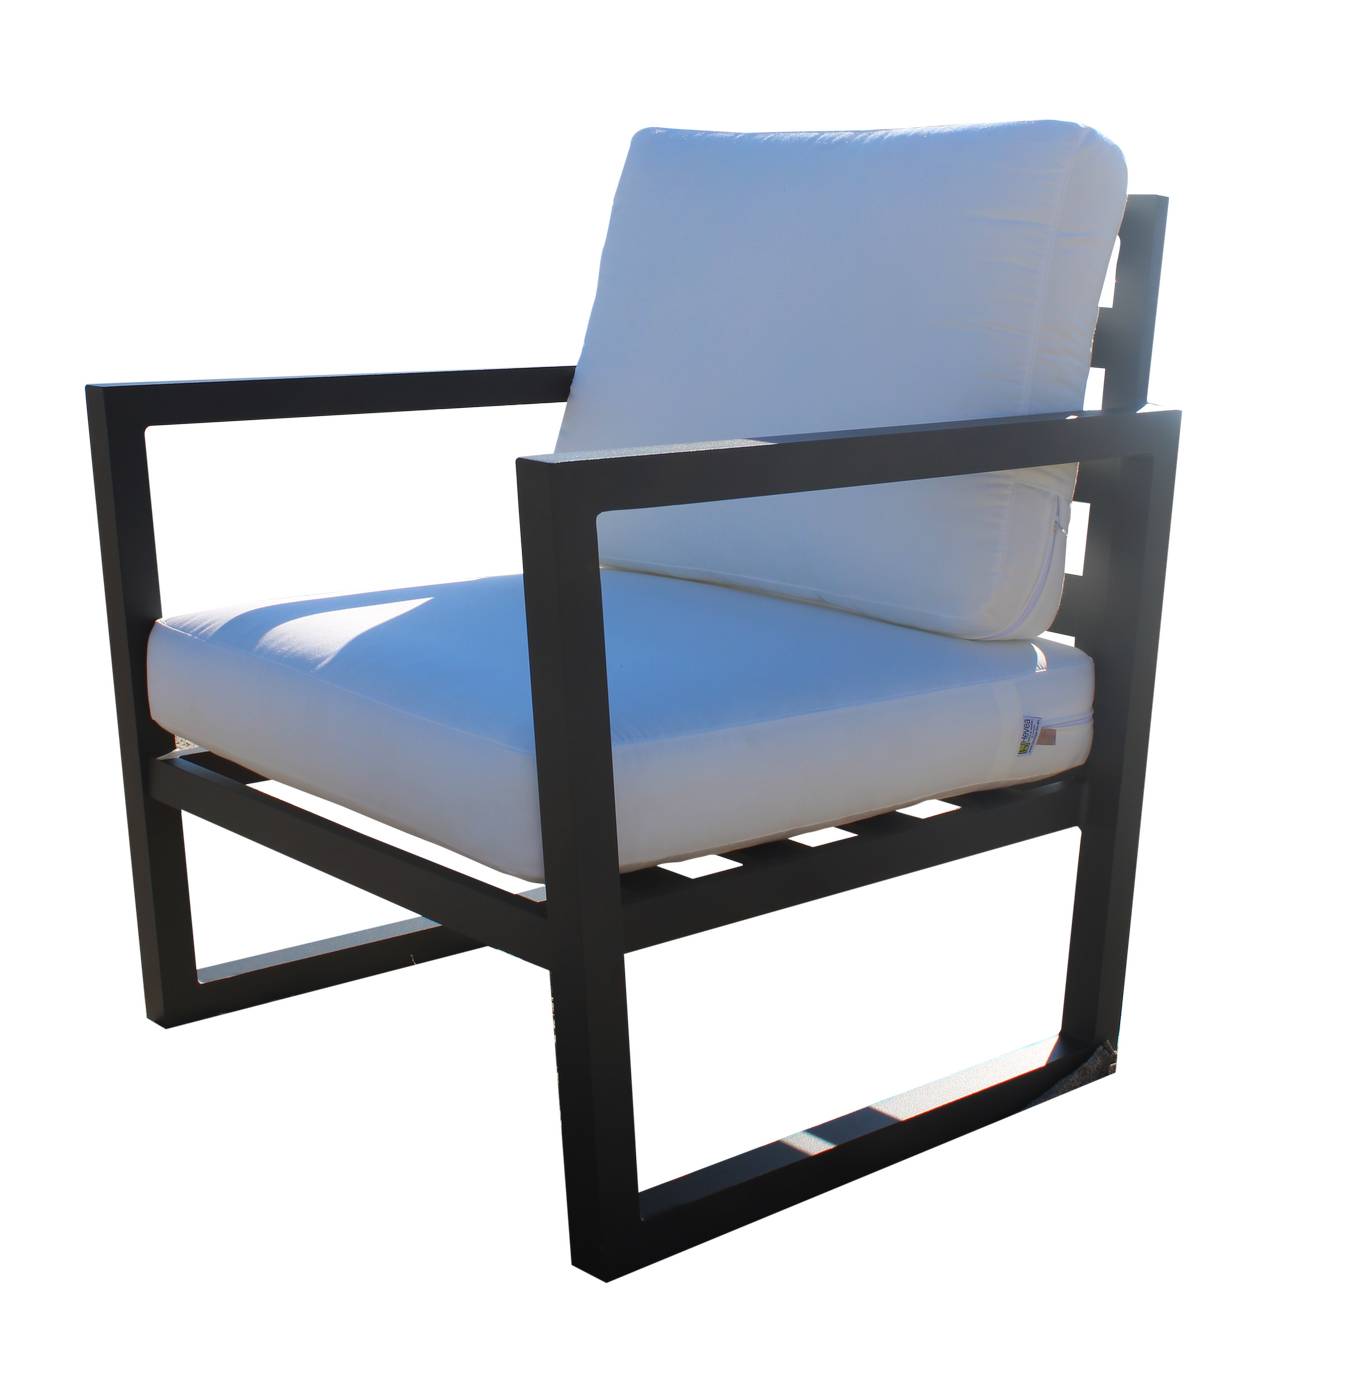 Set Aluminio Alpine-9 - Conjunto de aluminio para exterior: sofá 2 plazas + 2 sillones + mesa de centro + 2 taburetes. Disponible en color blanco, antracita, champagne, plata o marrón.